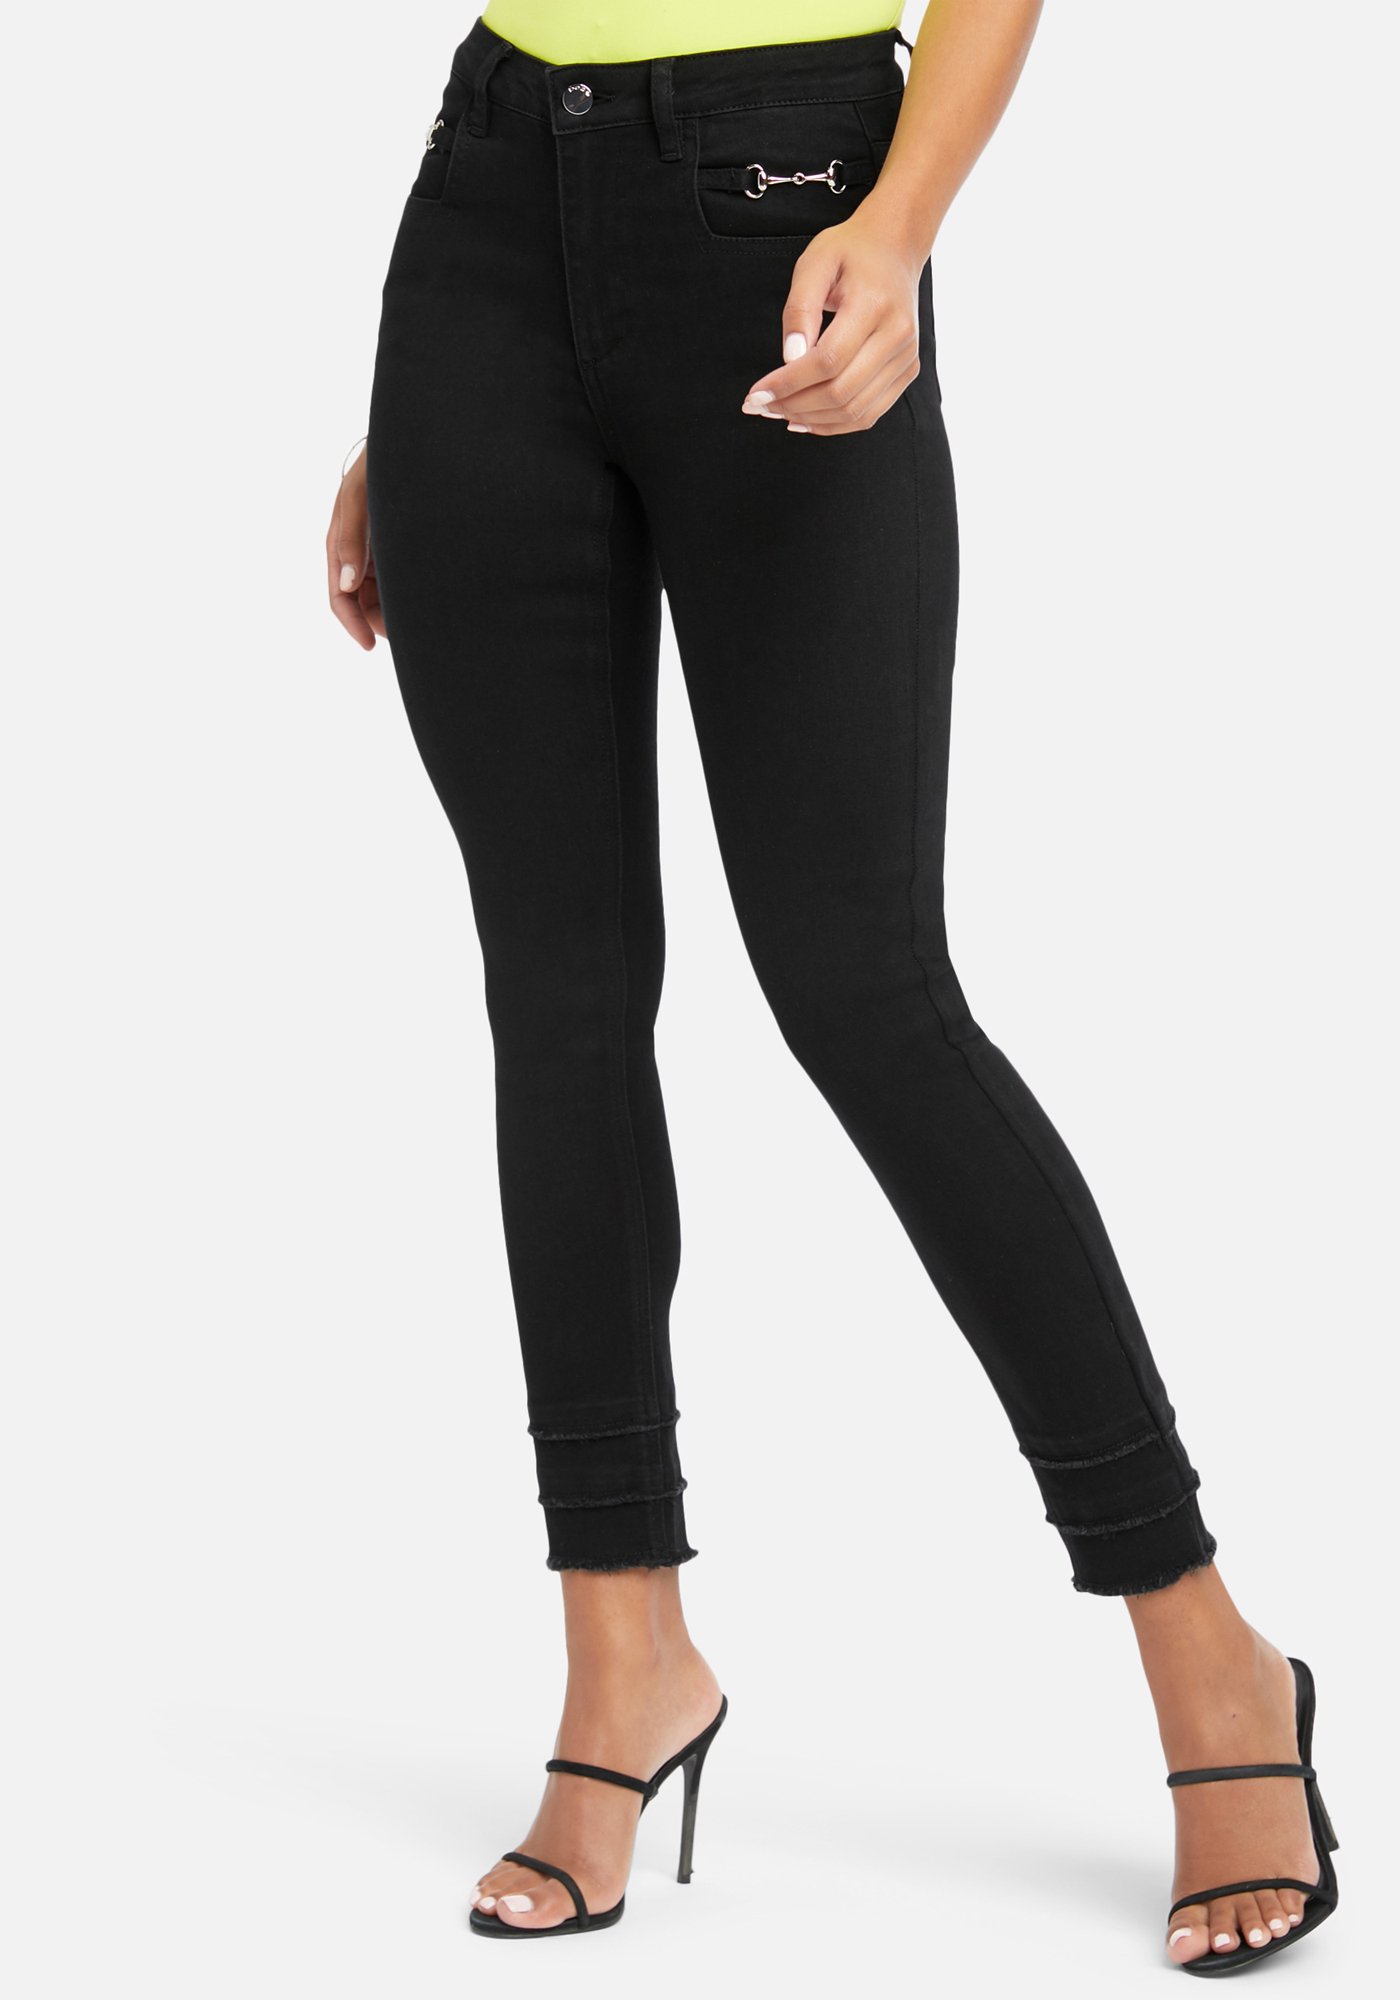 Bebe Women's Tiered Raw Edge Hem Jeans, Size 28 in Black Wash Metal/Cotton/Spandex